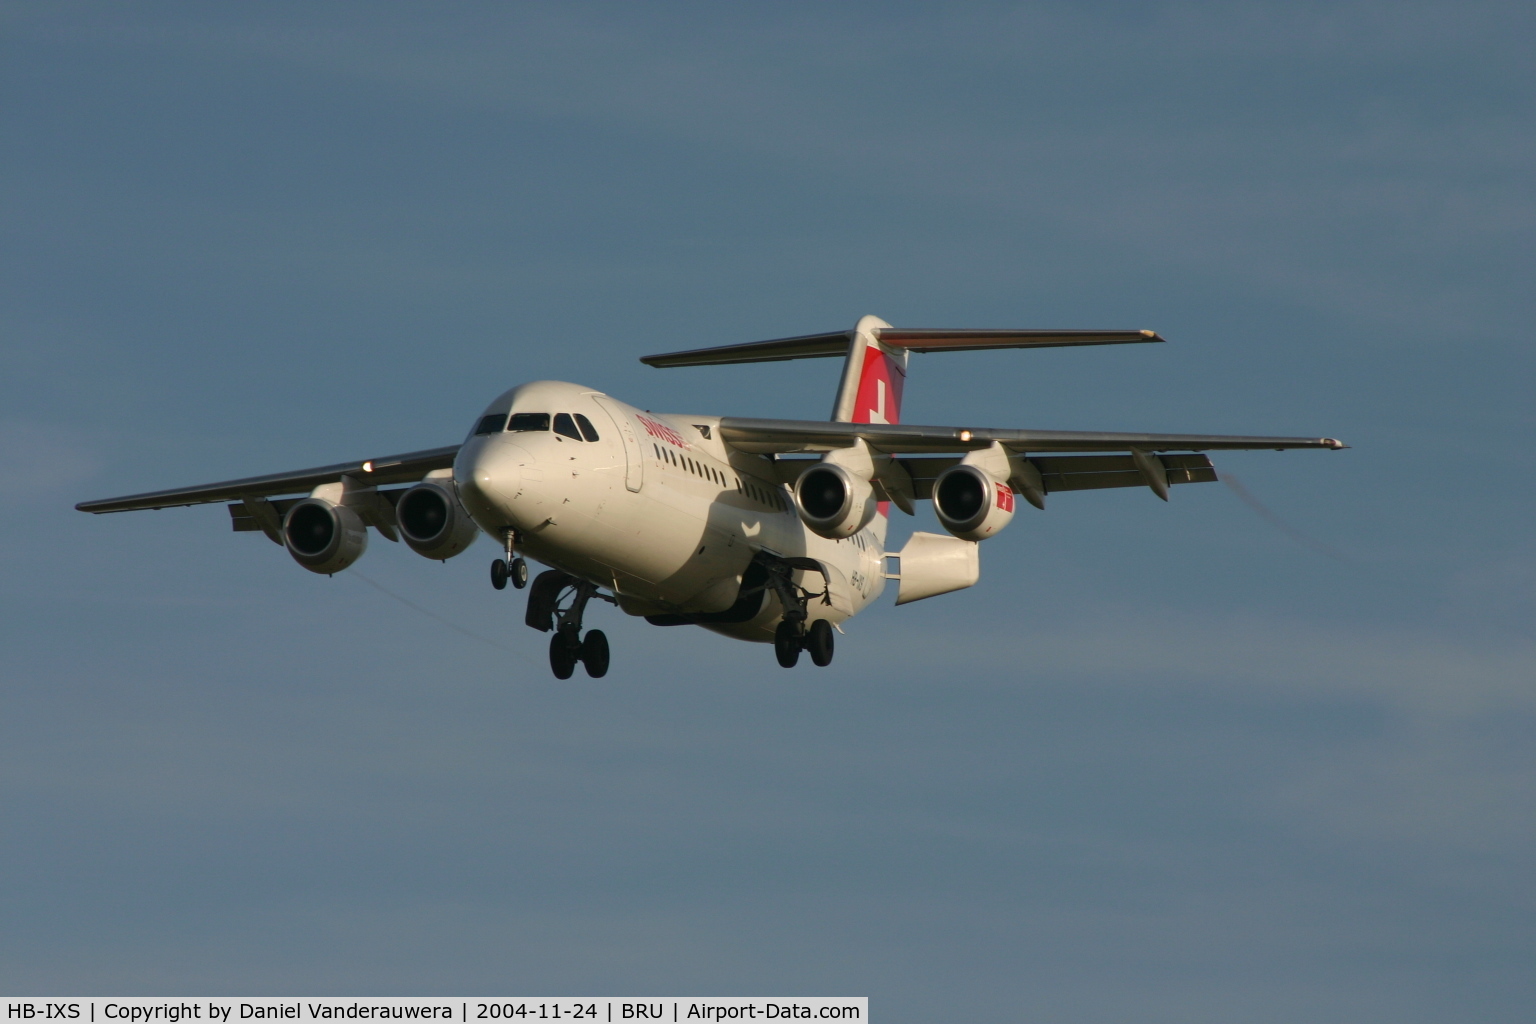 HB-IXS, 1995 British Aerospace Avro 146-RJ100 C/N E3280, arrival of flight LX778